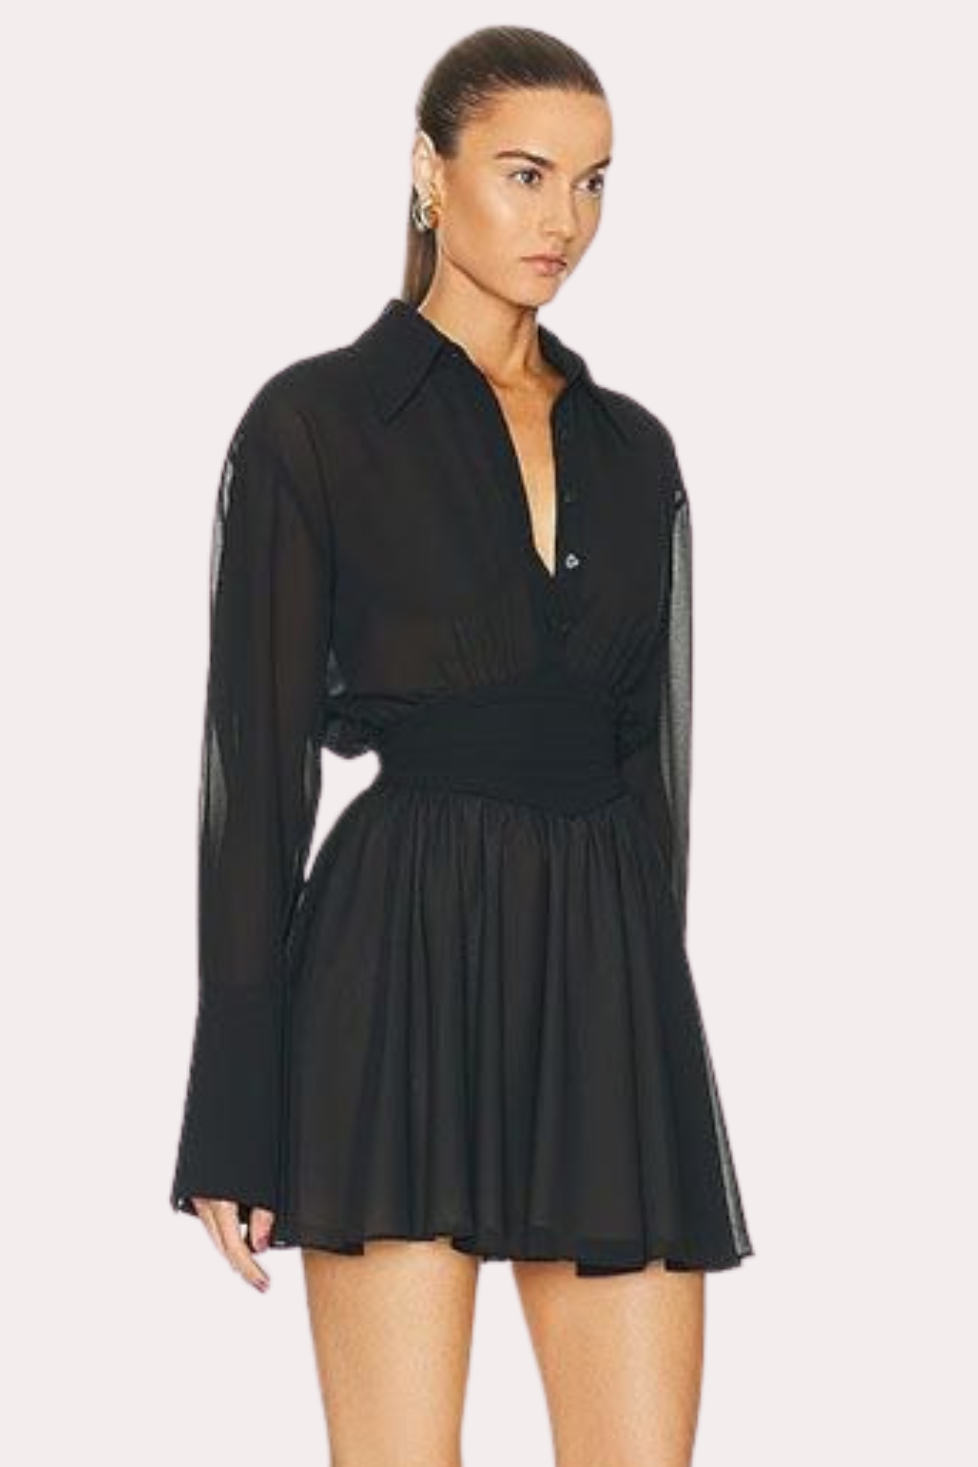 Stella Black Dress - Pre Order for just $99